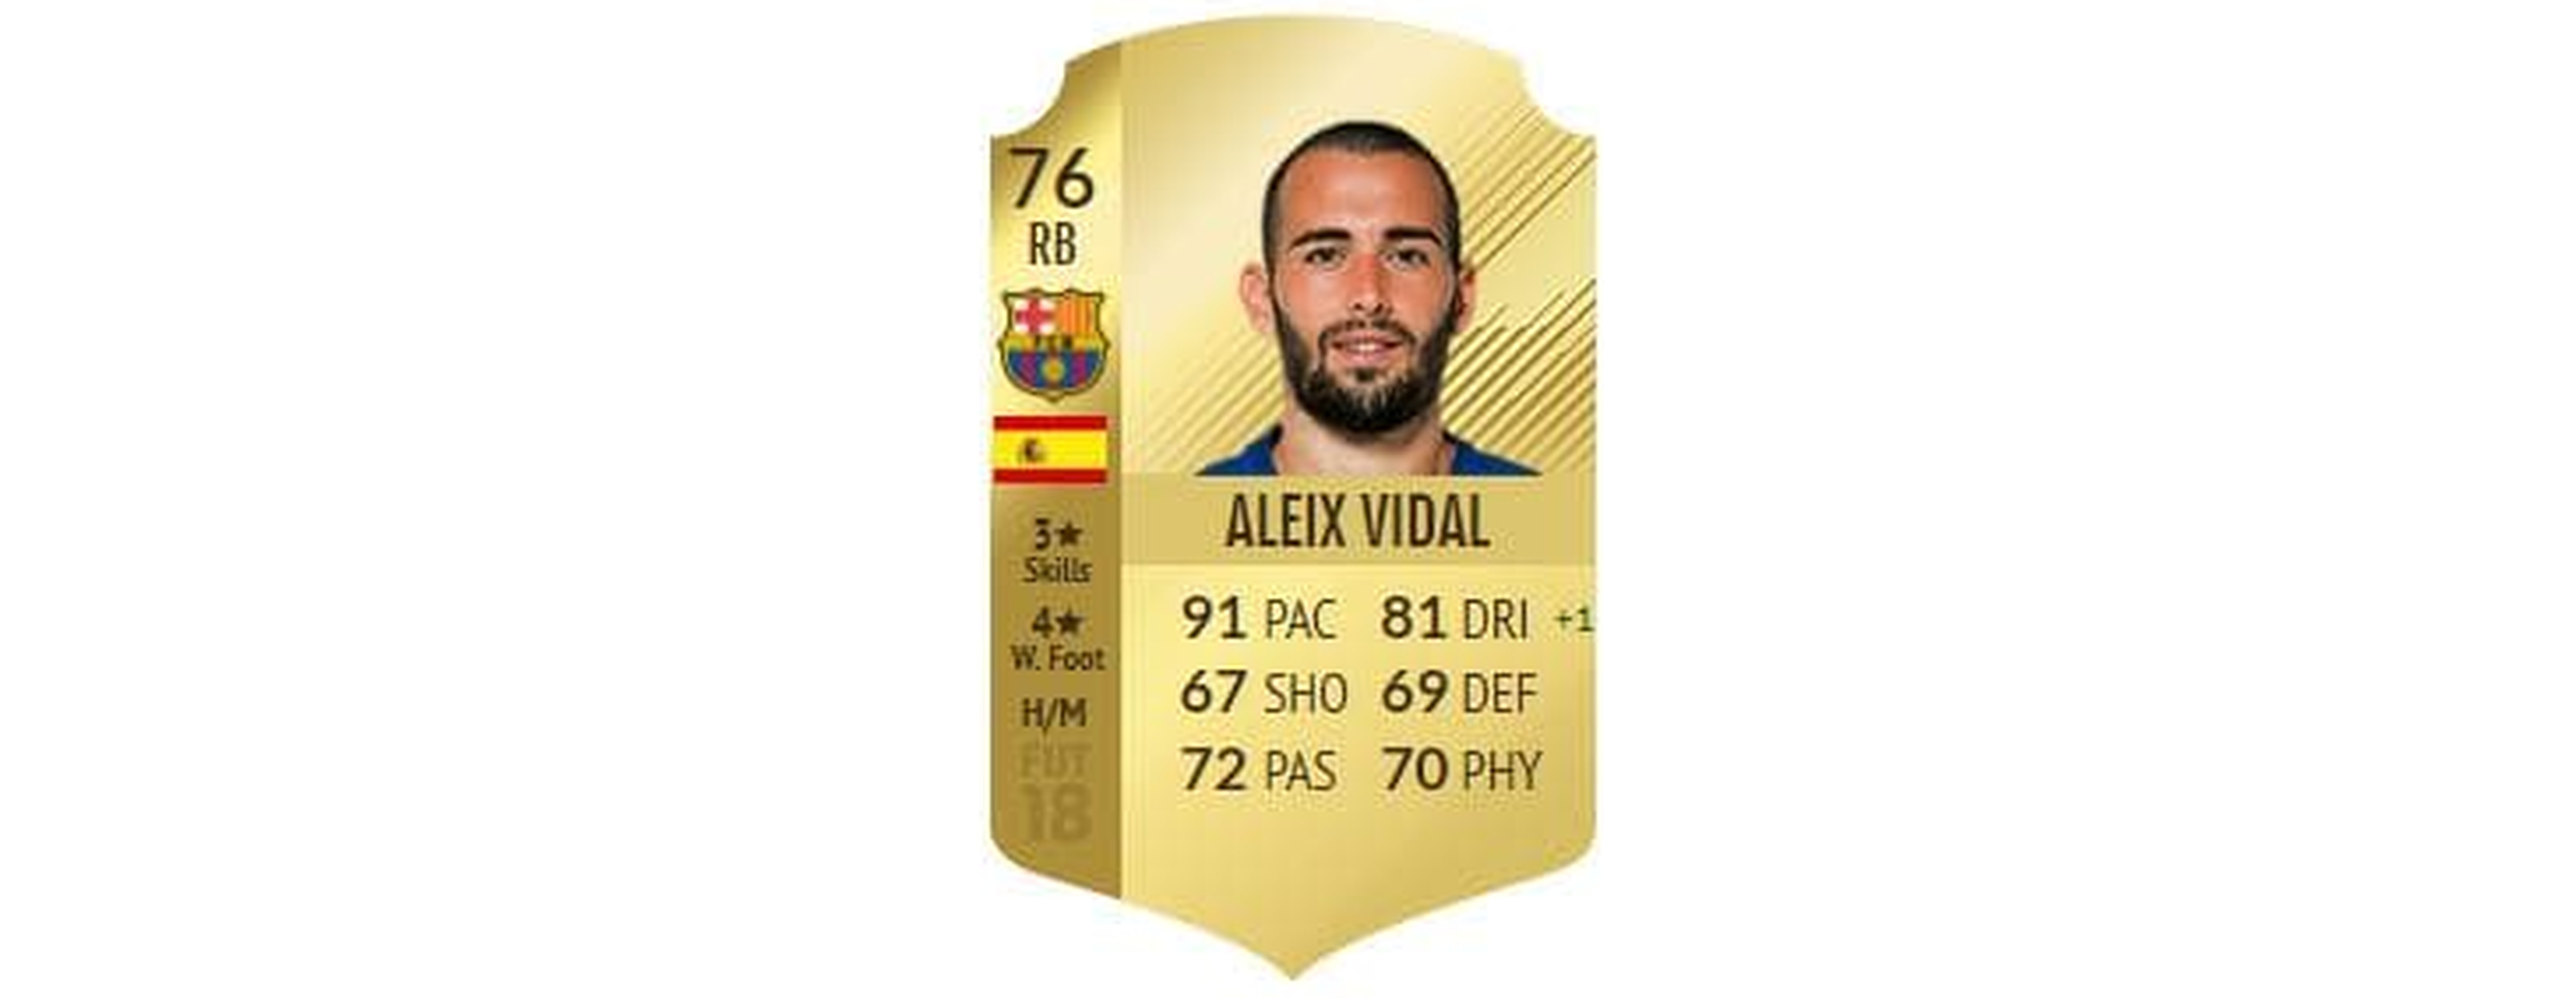 FIFA 18 - Alexis Vidal